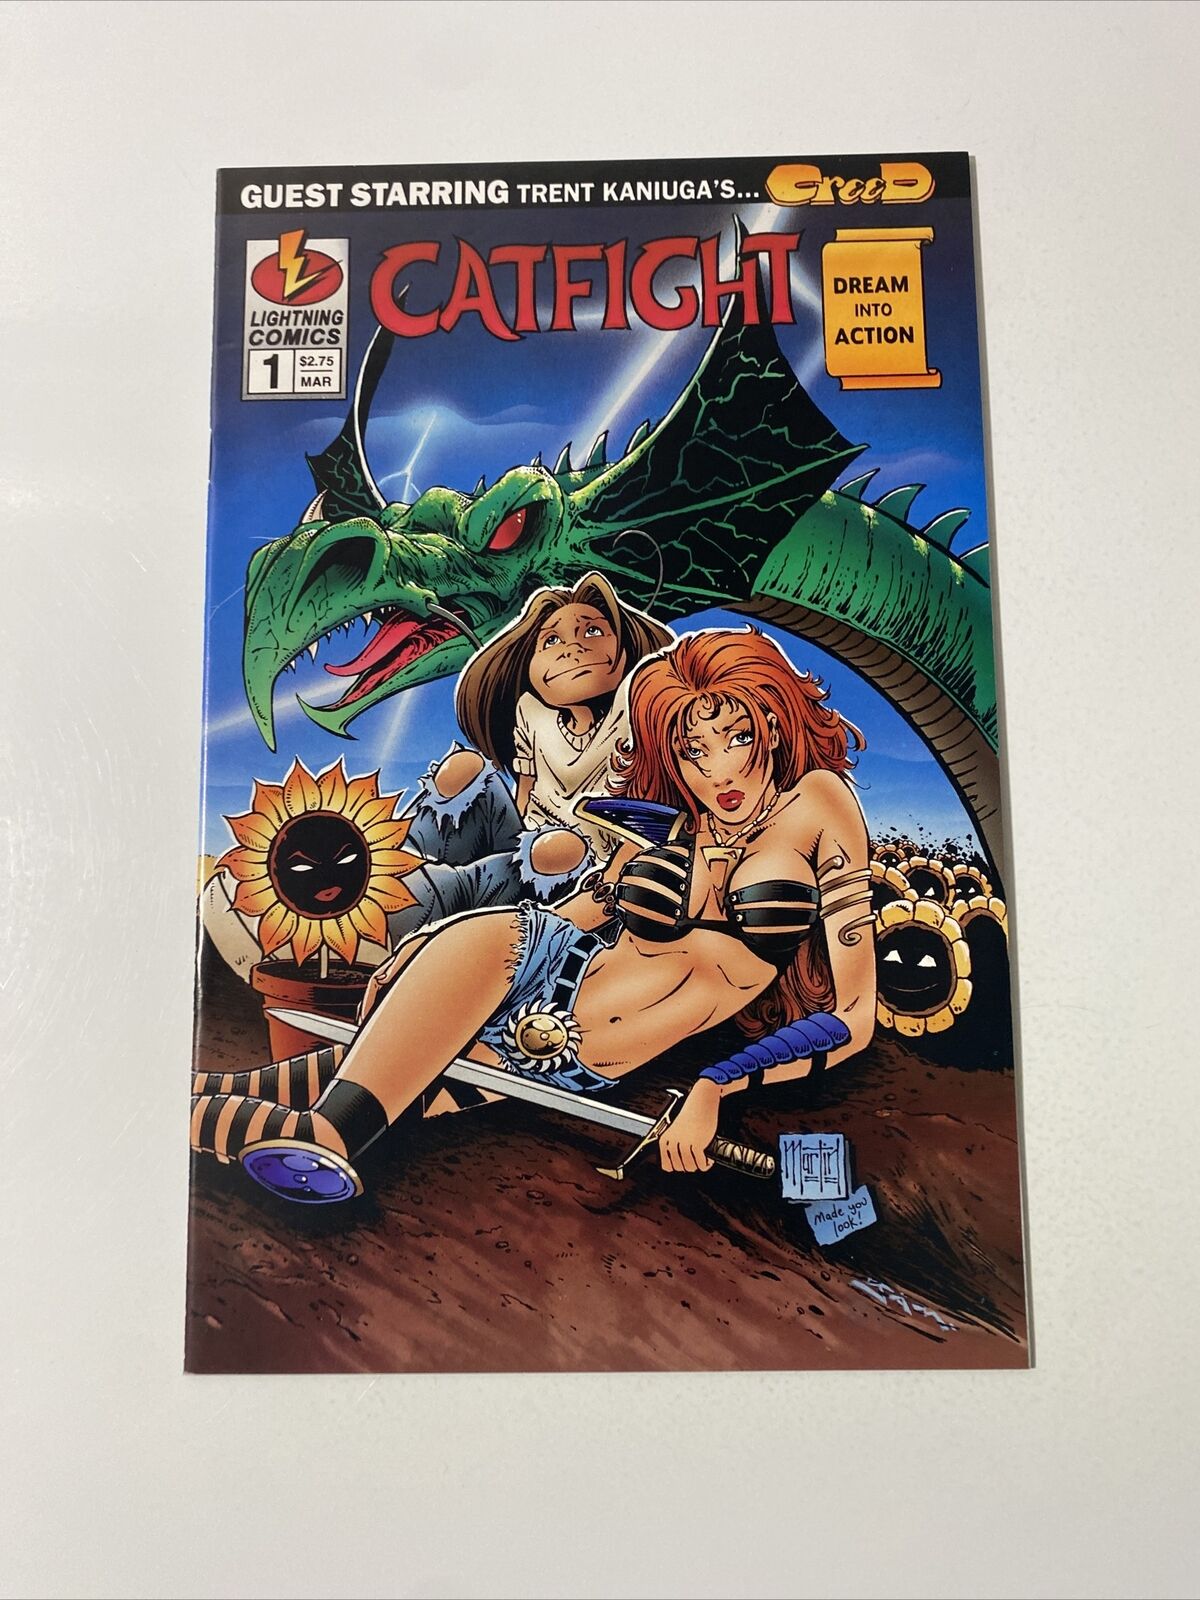 CATFIGHT #1 CREED Lightning Comics 1996 High Grade rare comic